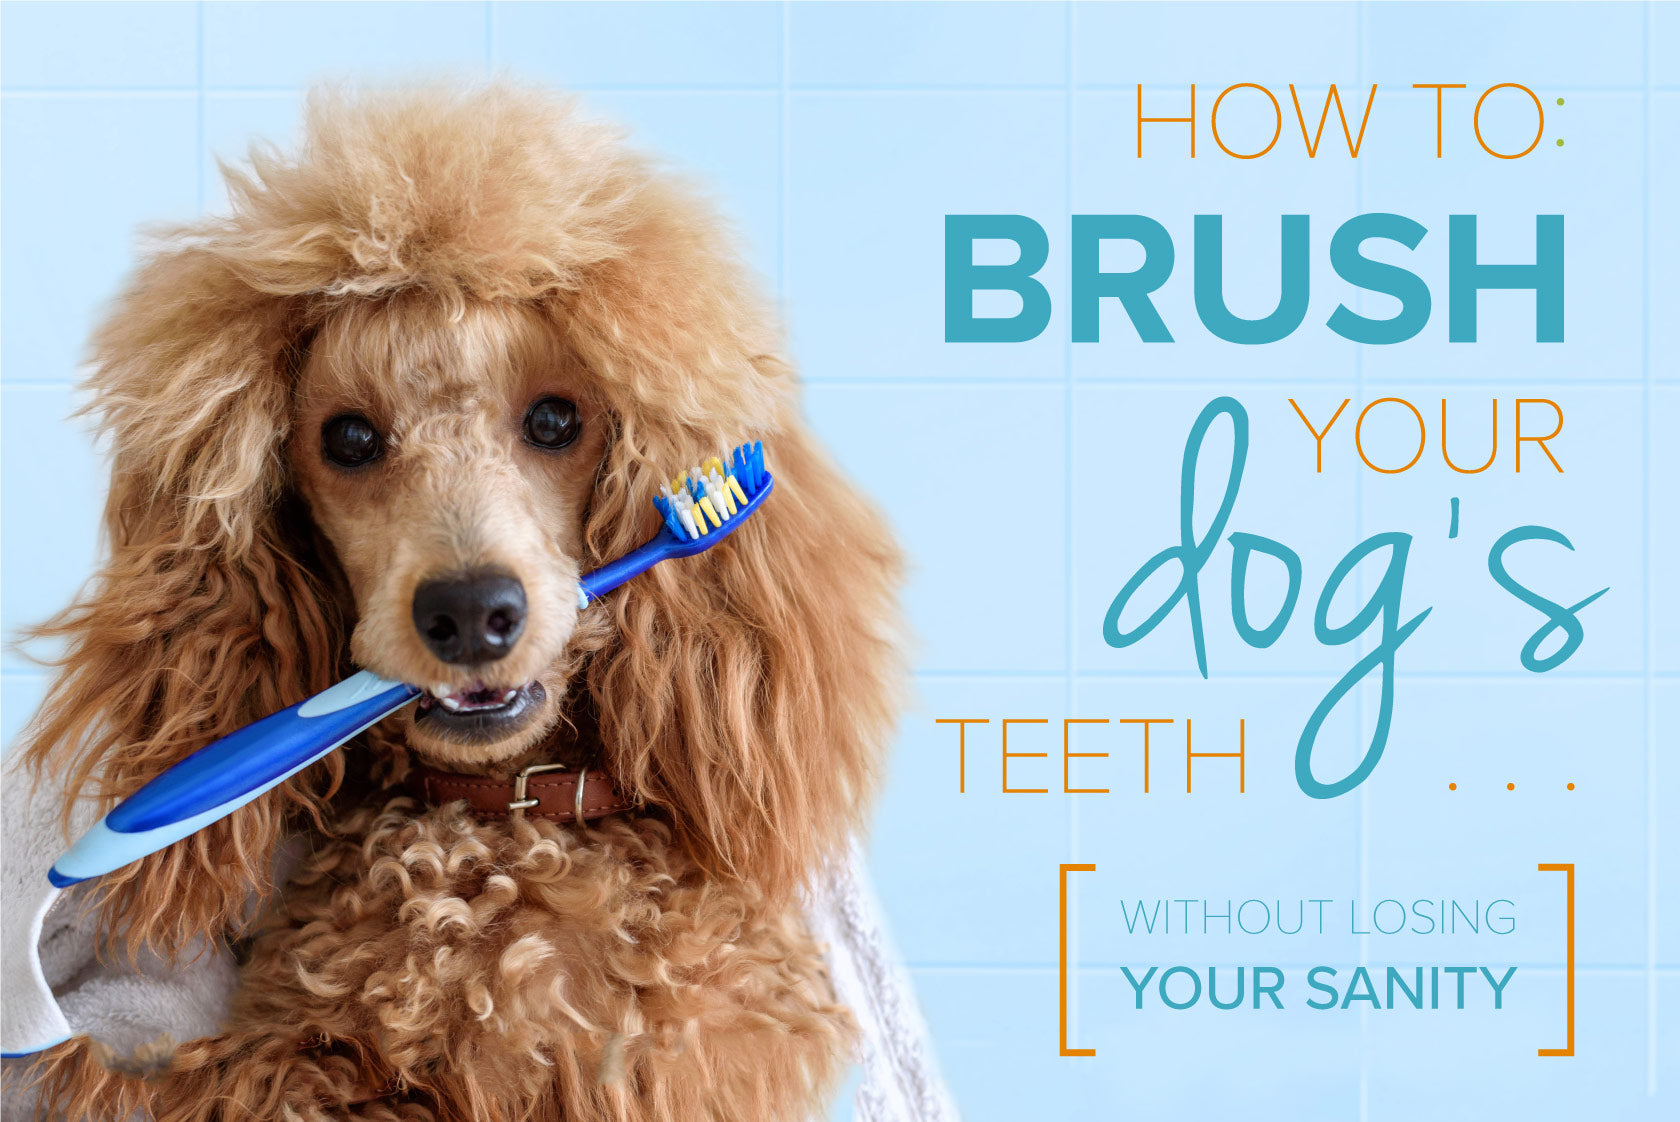 Oxyfresh - How To Brush Dogs Teeth